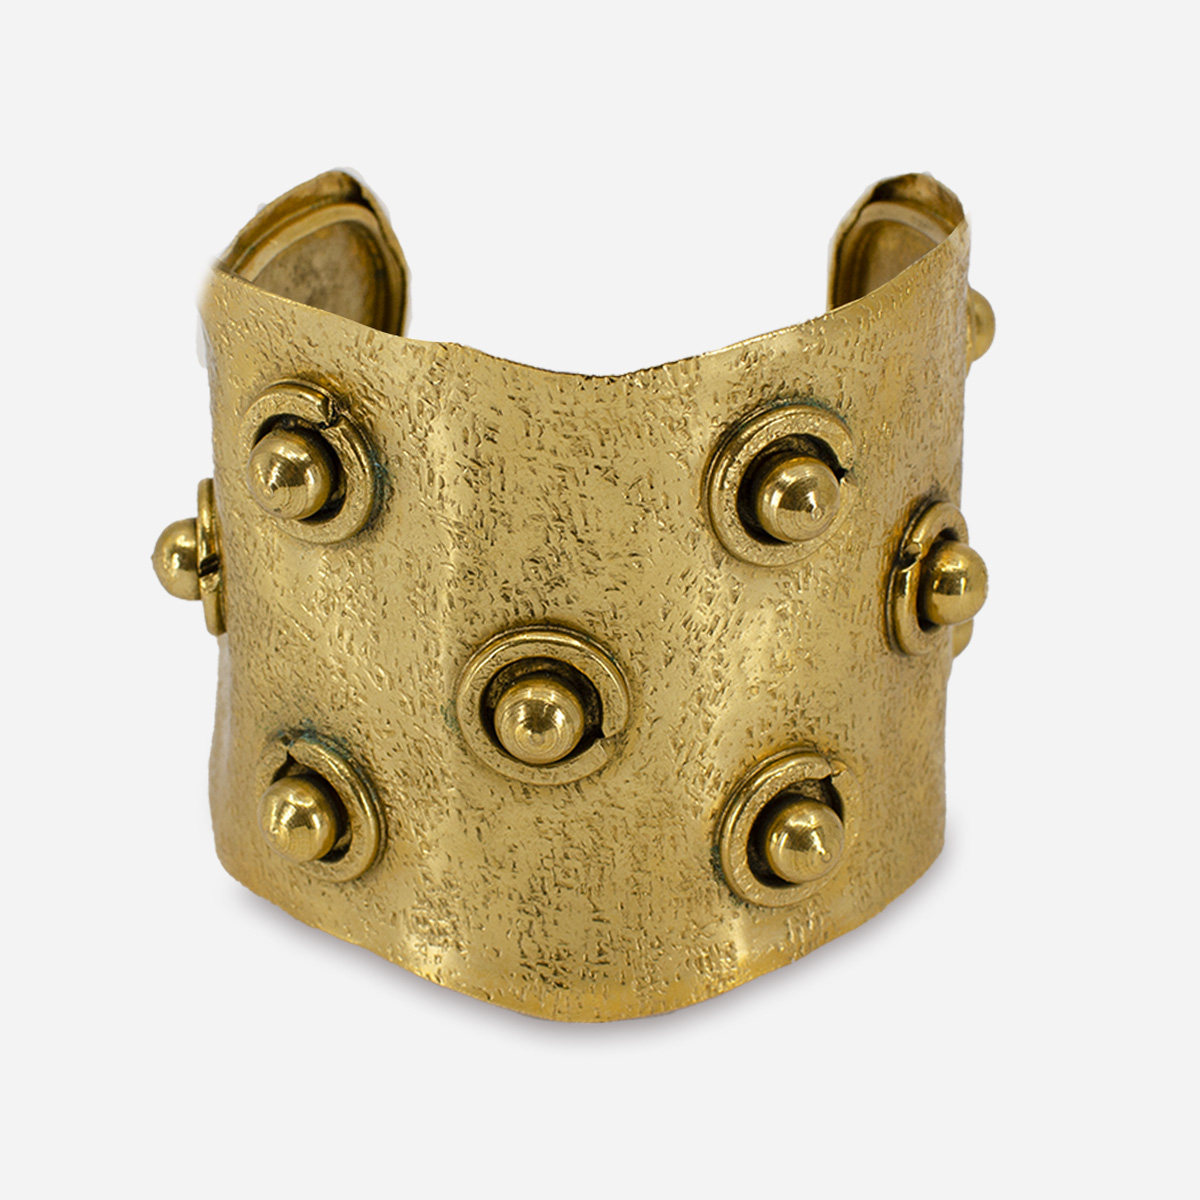 Henry Perichon gold cuff bracelet